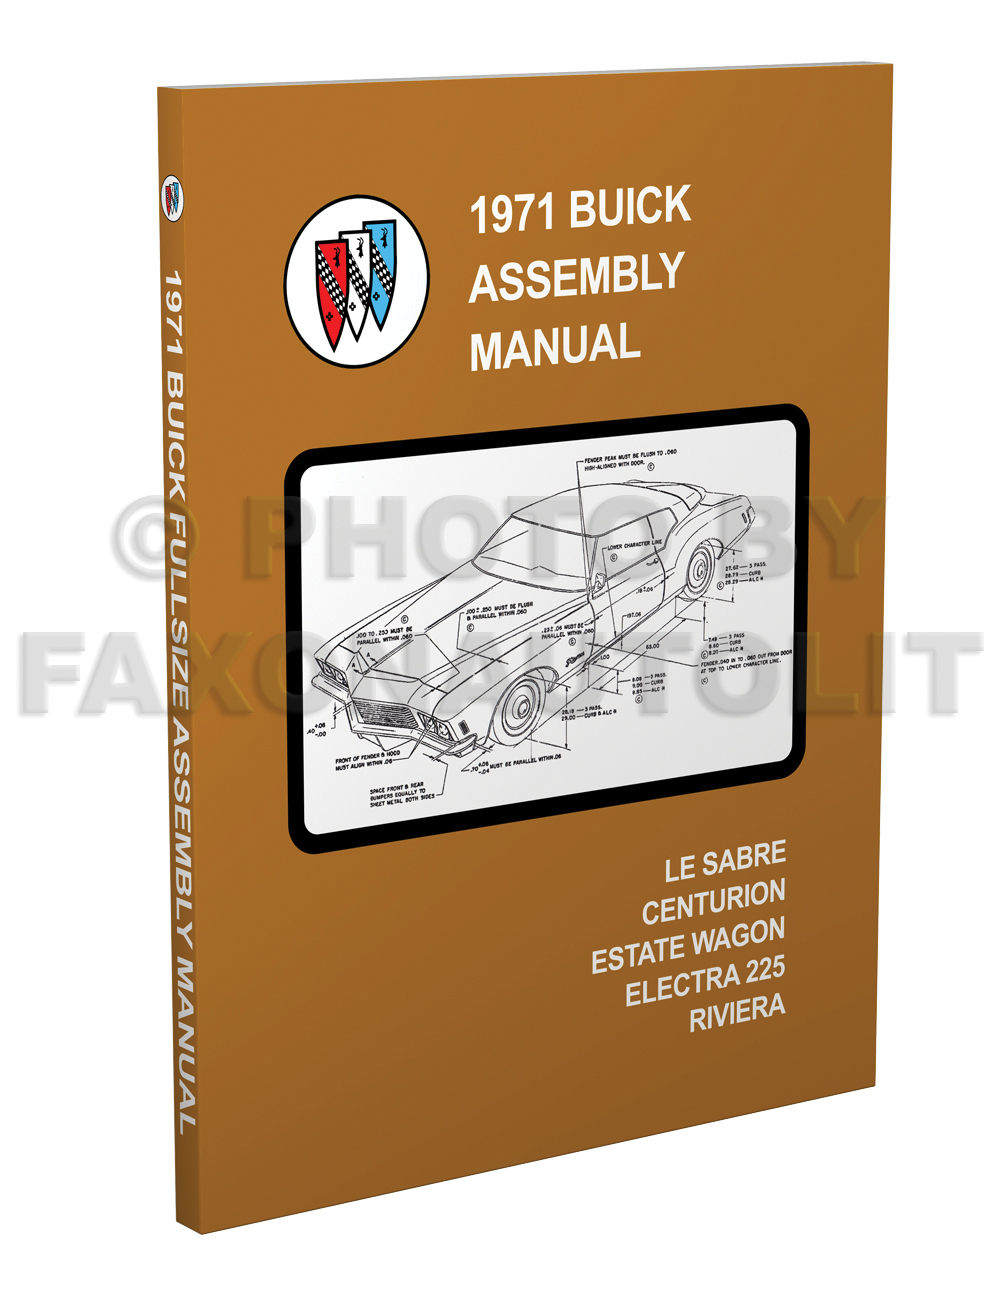 1971 Buick Assembly Manual LeSabre Centurion Electra Riviera Reprint